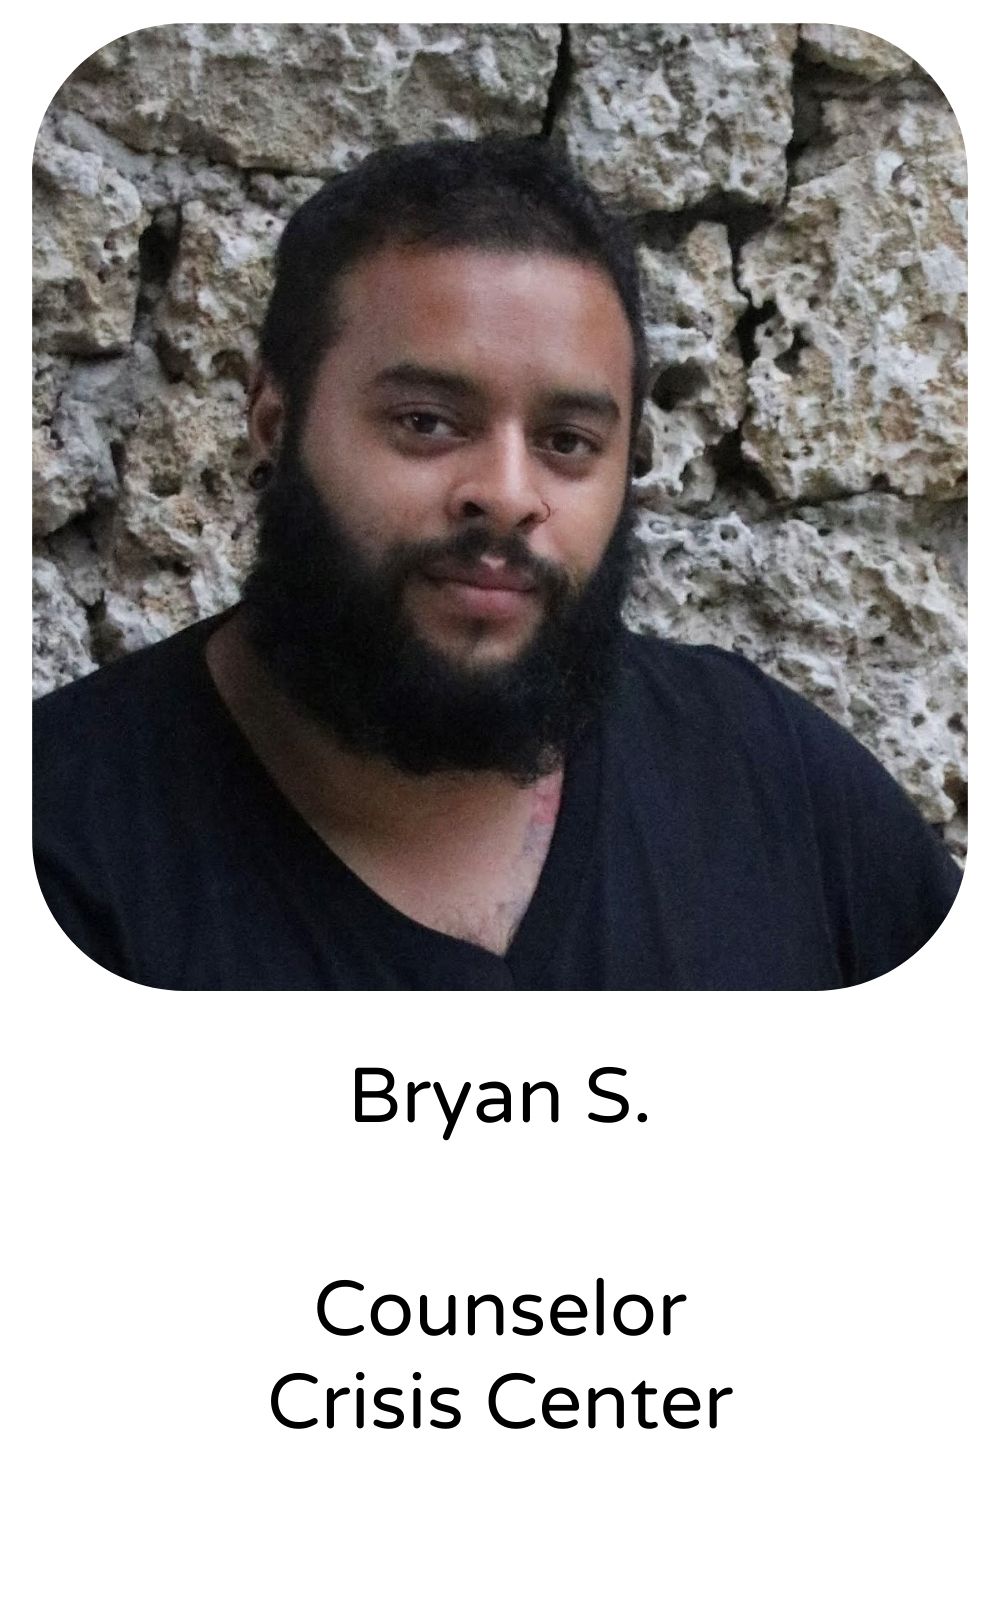 Bryan S, Counselor, Crisis Center